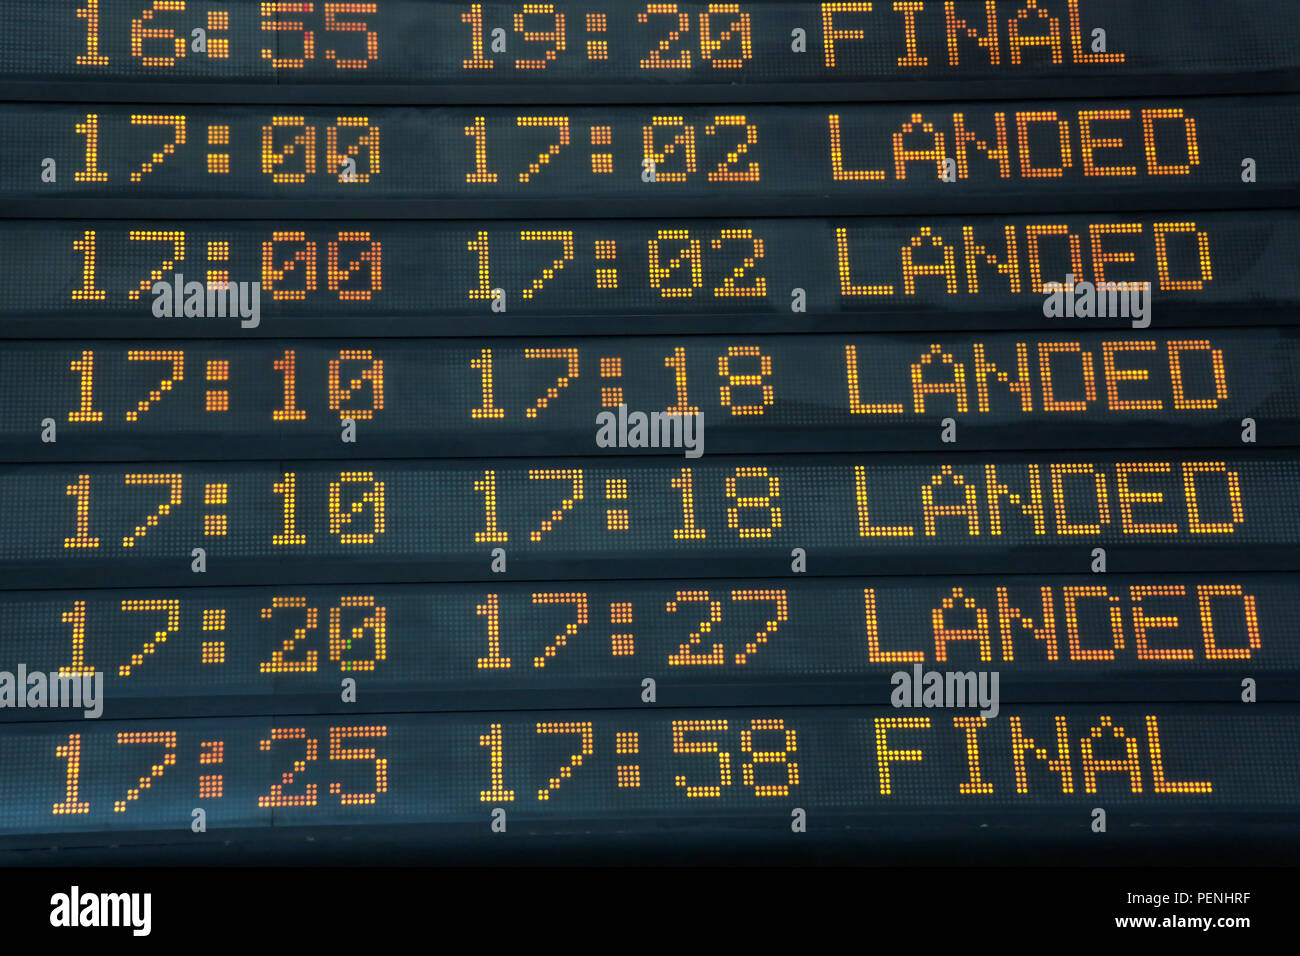 Flights information board Stock Photo